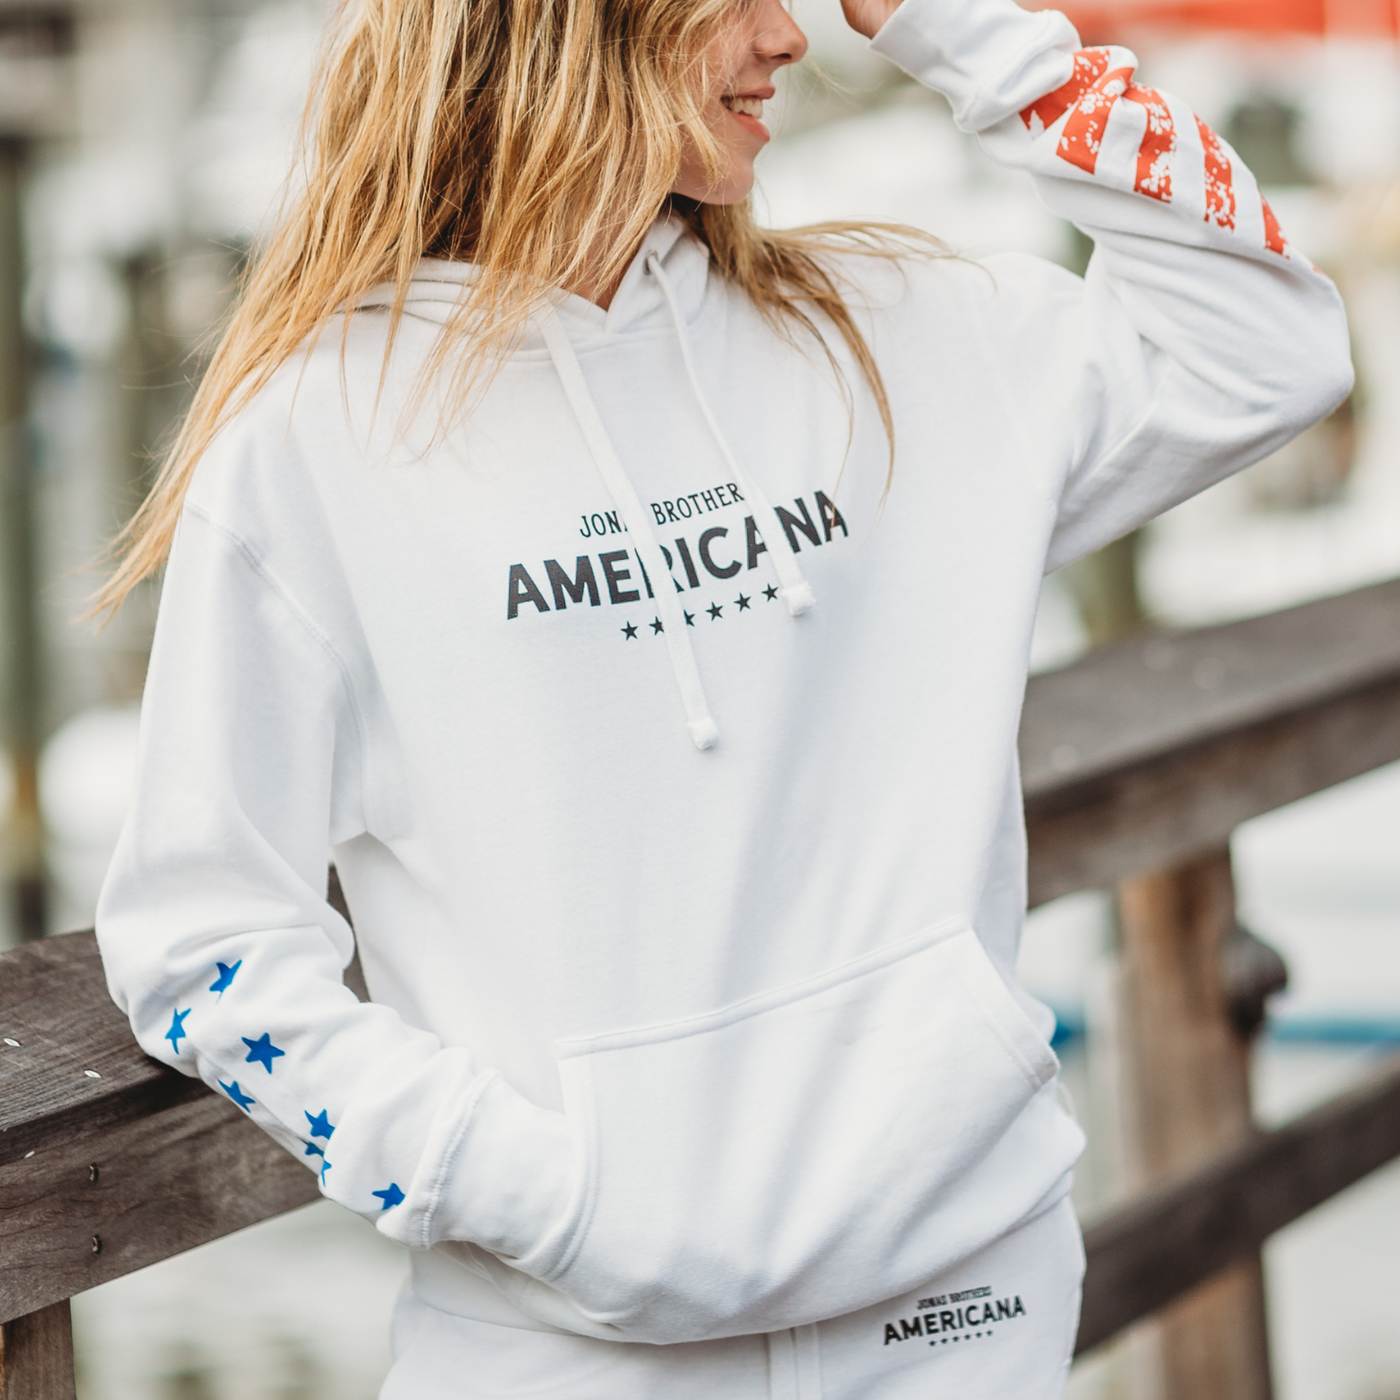 Americana-Sweatshirt – Weiß